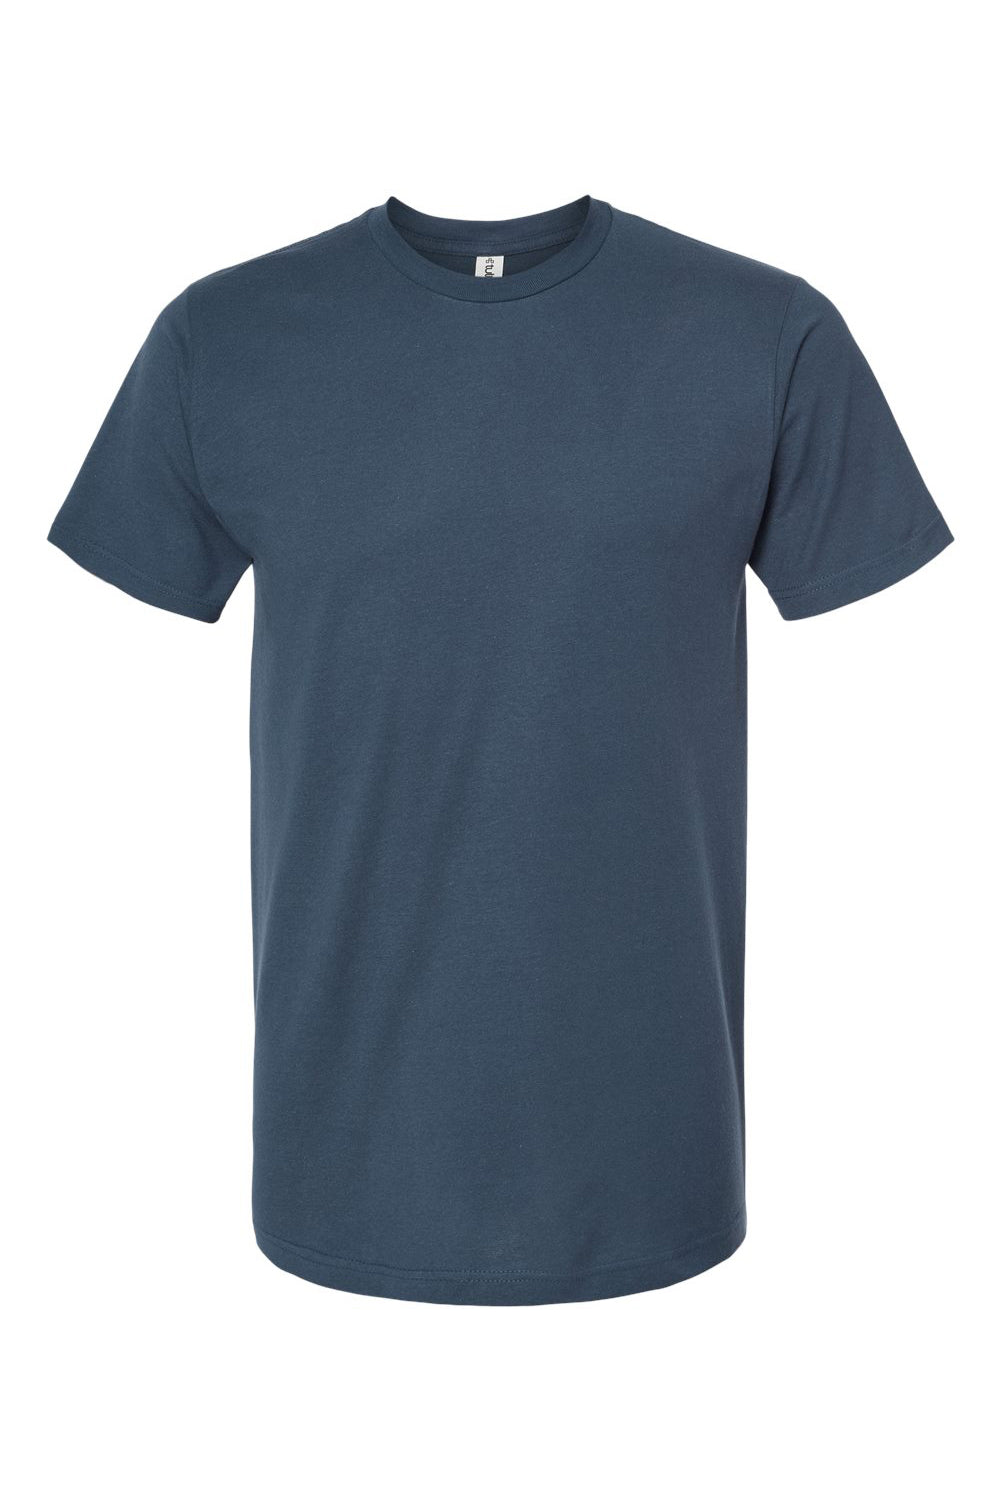 Tultex 202 Mens Fine Jersey Short Sleeve Crewneck T-Shirt Indigo Blue Flat Front